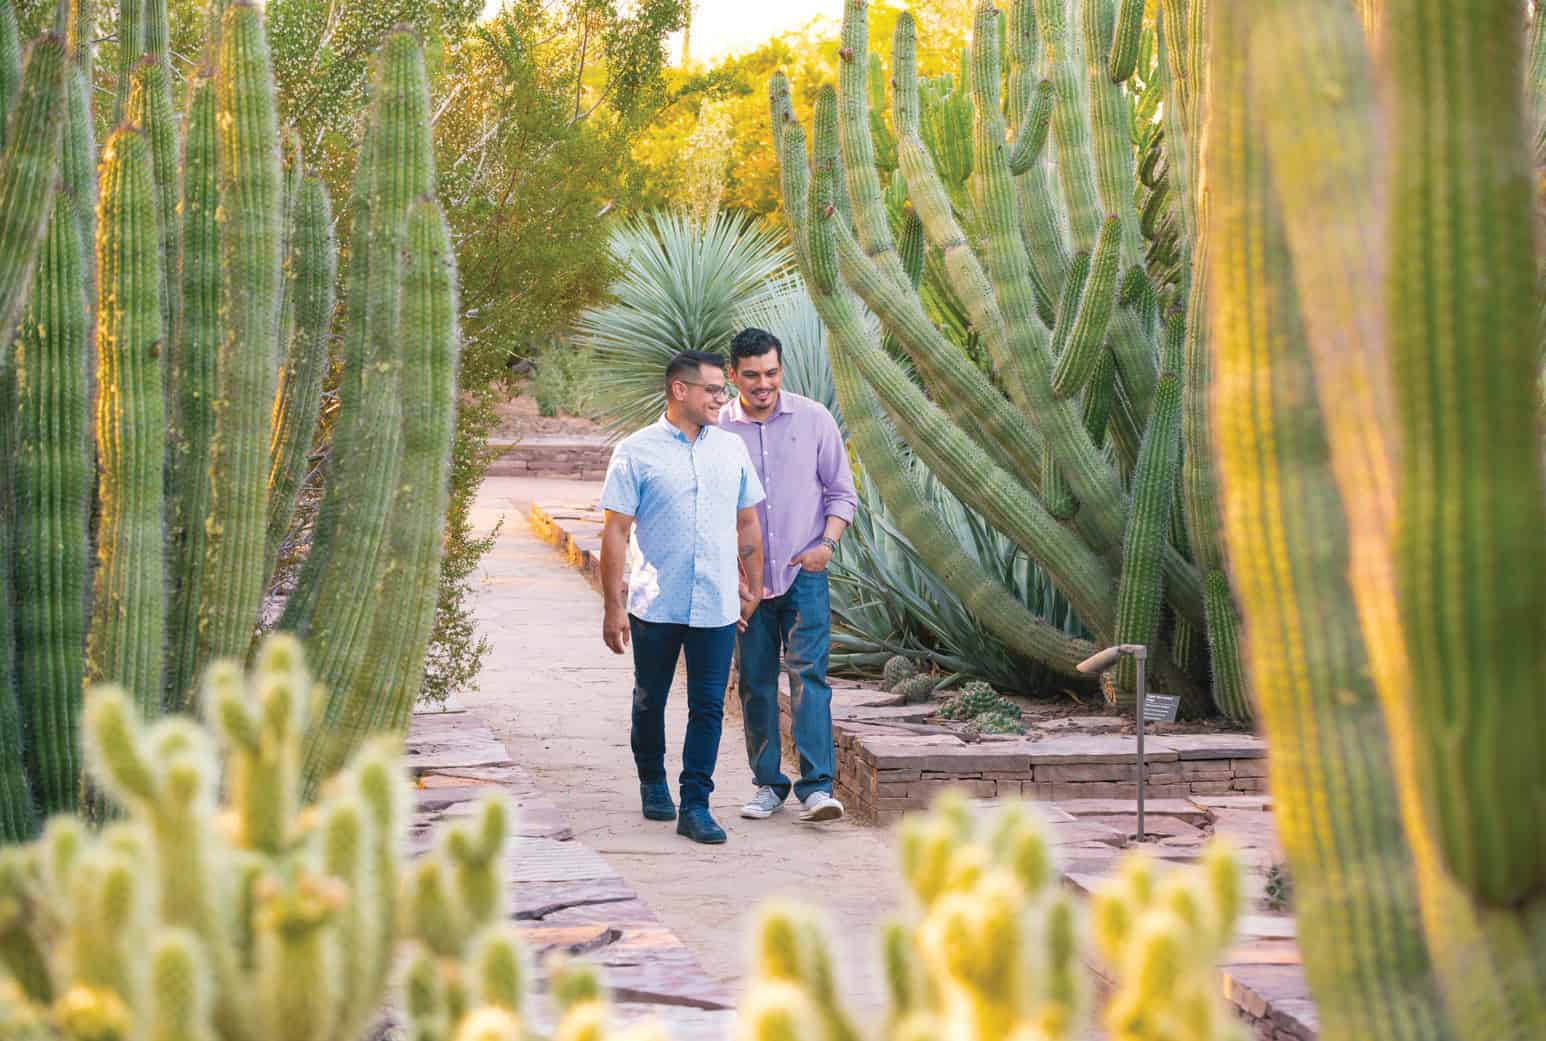 The Desert Botanical Garden encompasses 140 acres and thousands of plants.